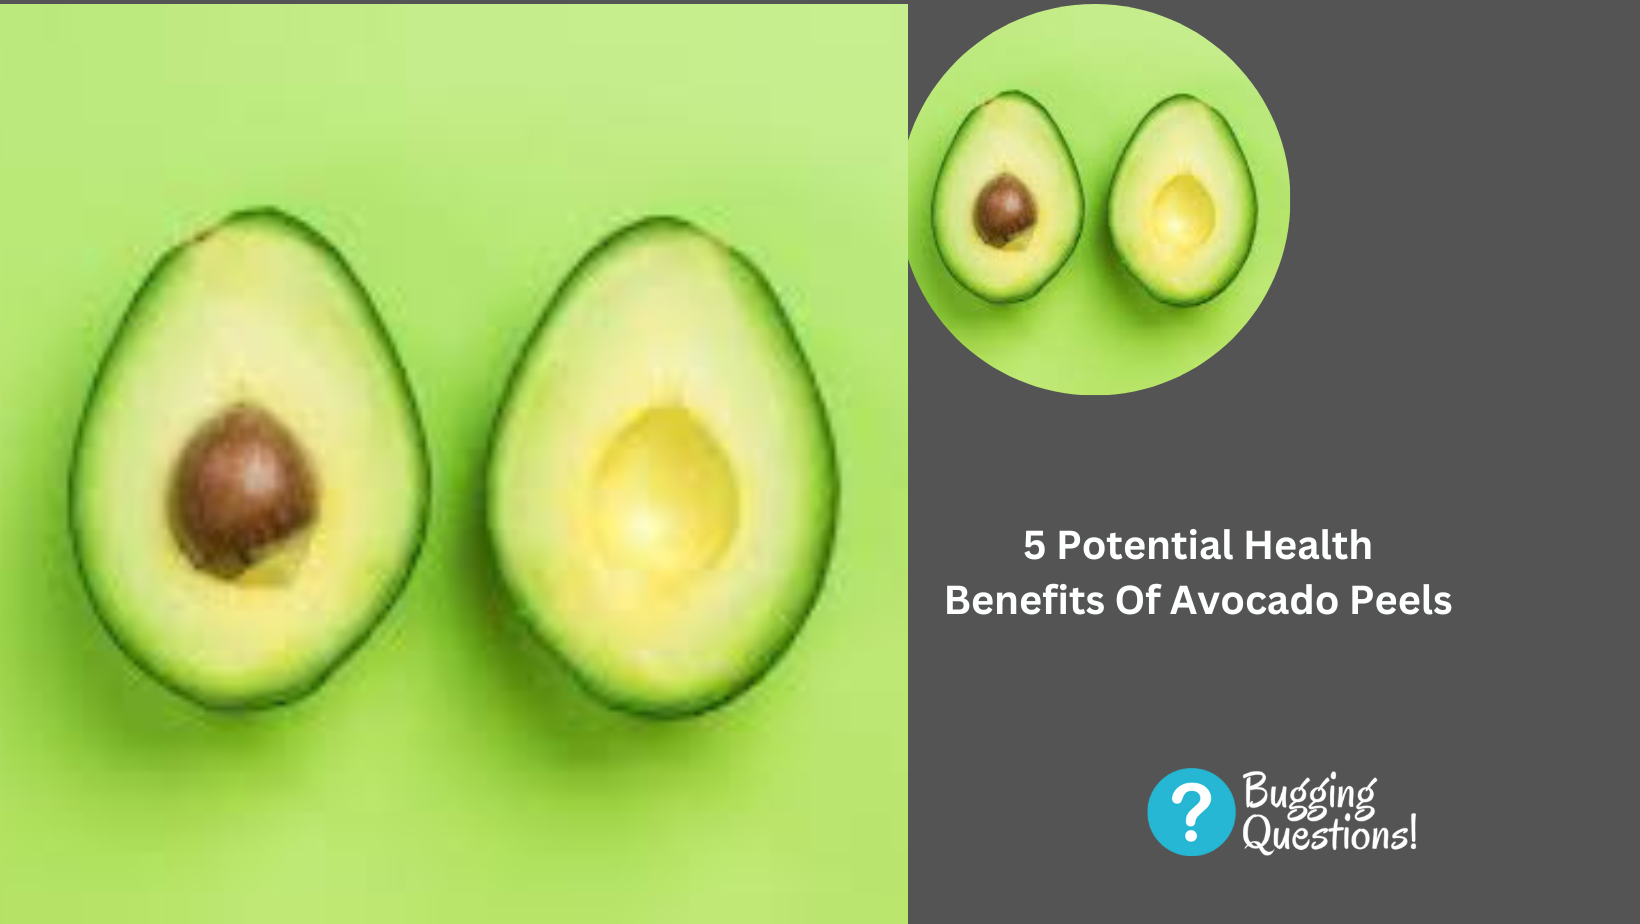 5 Potential Health Benefits Of Avocado Peels